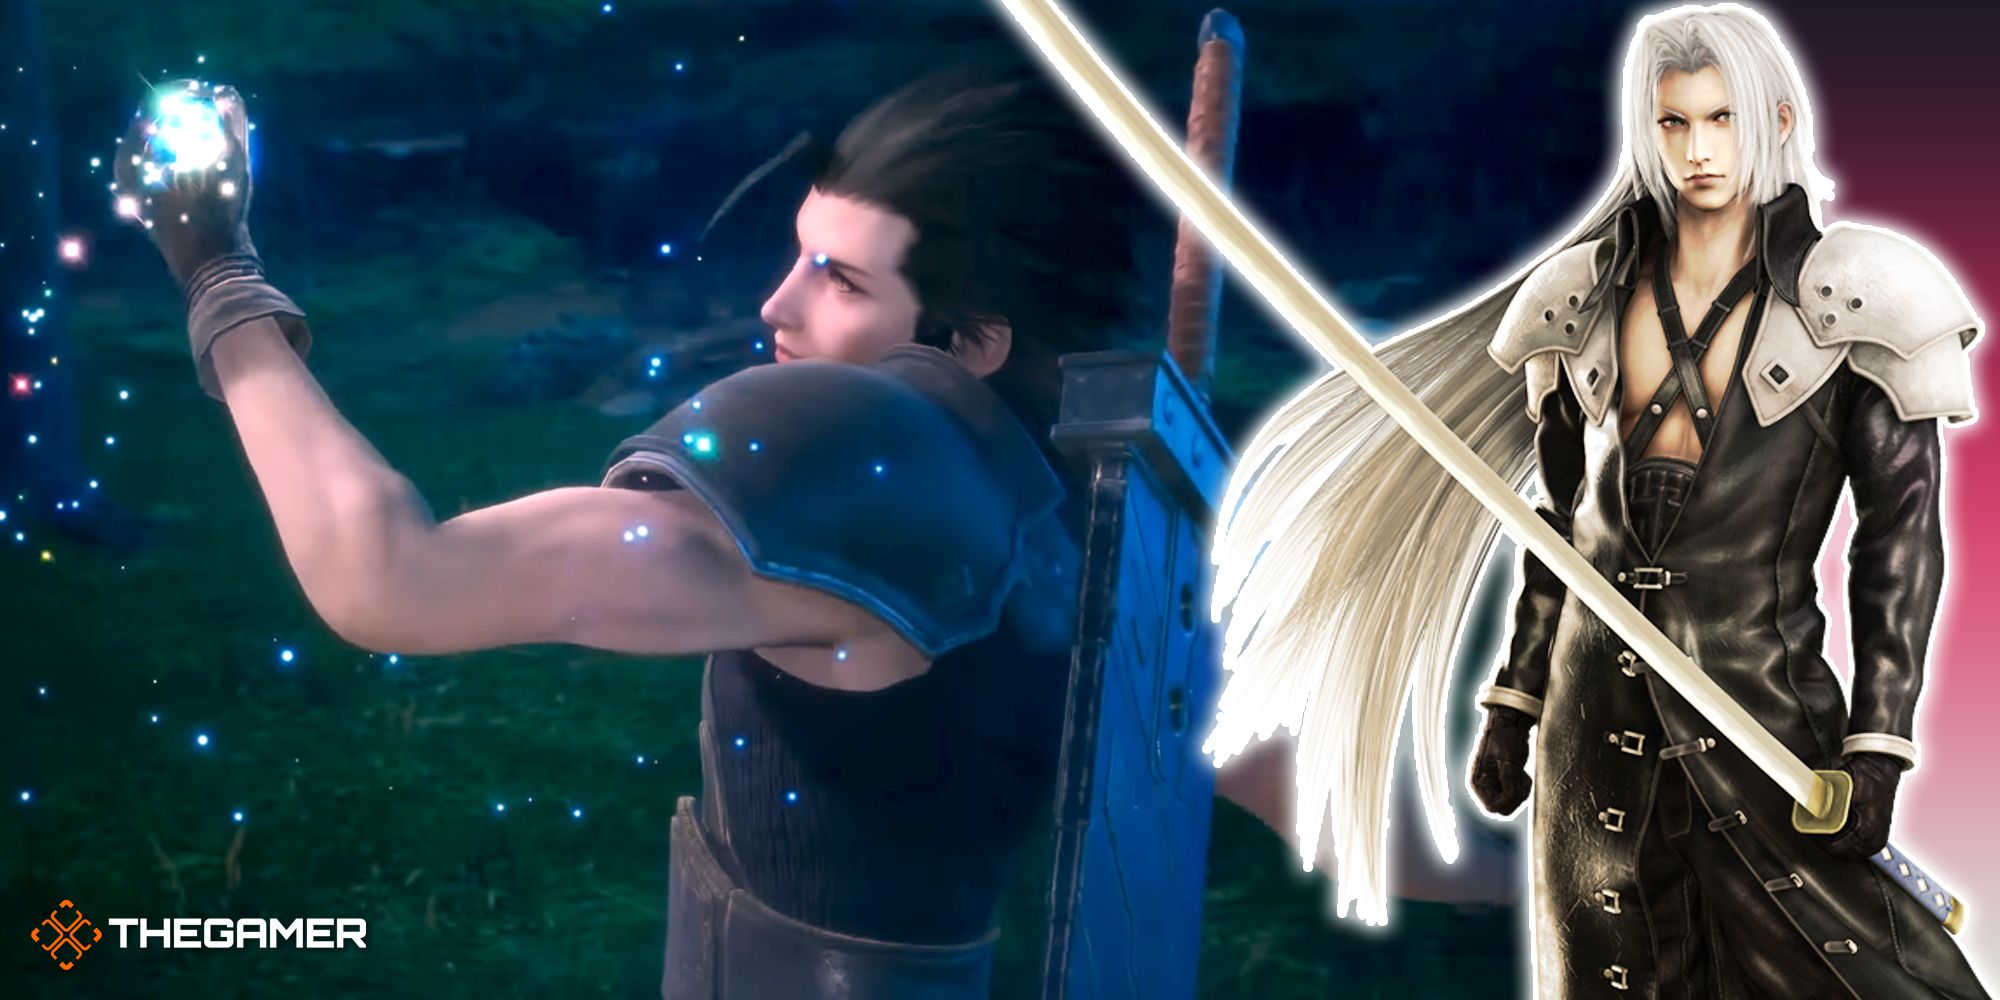 Screenshot and art from Crisis Core Final Fantasy 7 Reunion.